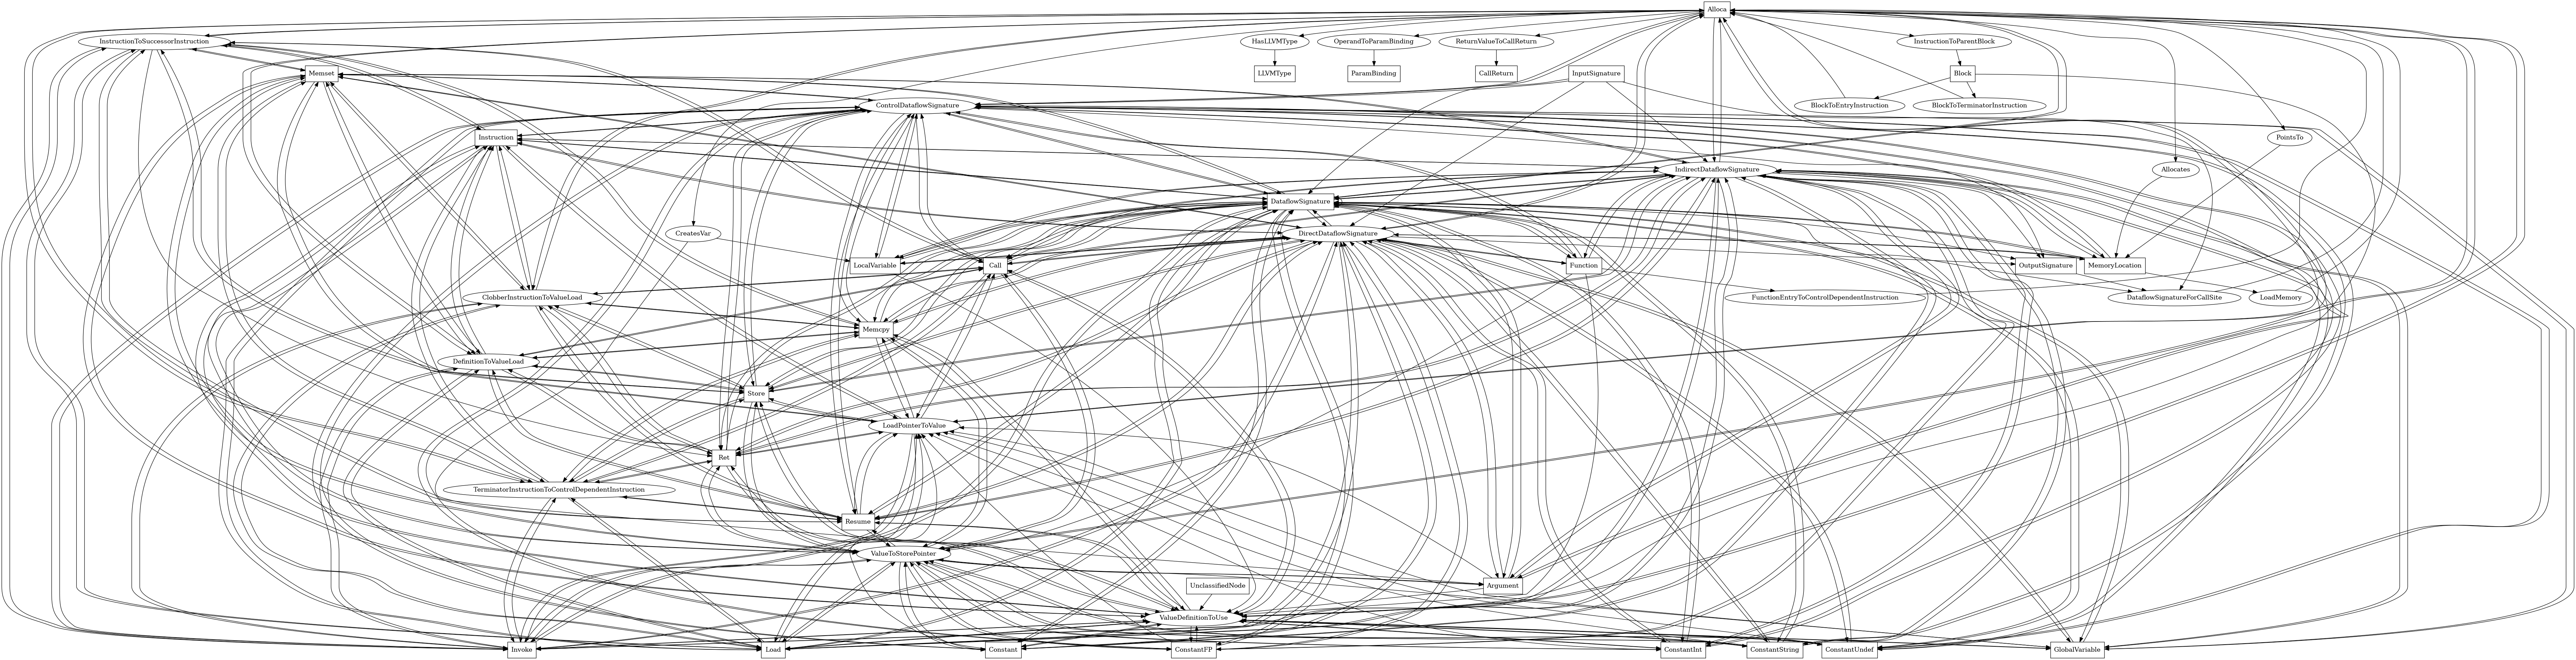 Entity-relationship diagram for Alloca nodes